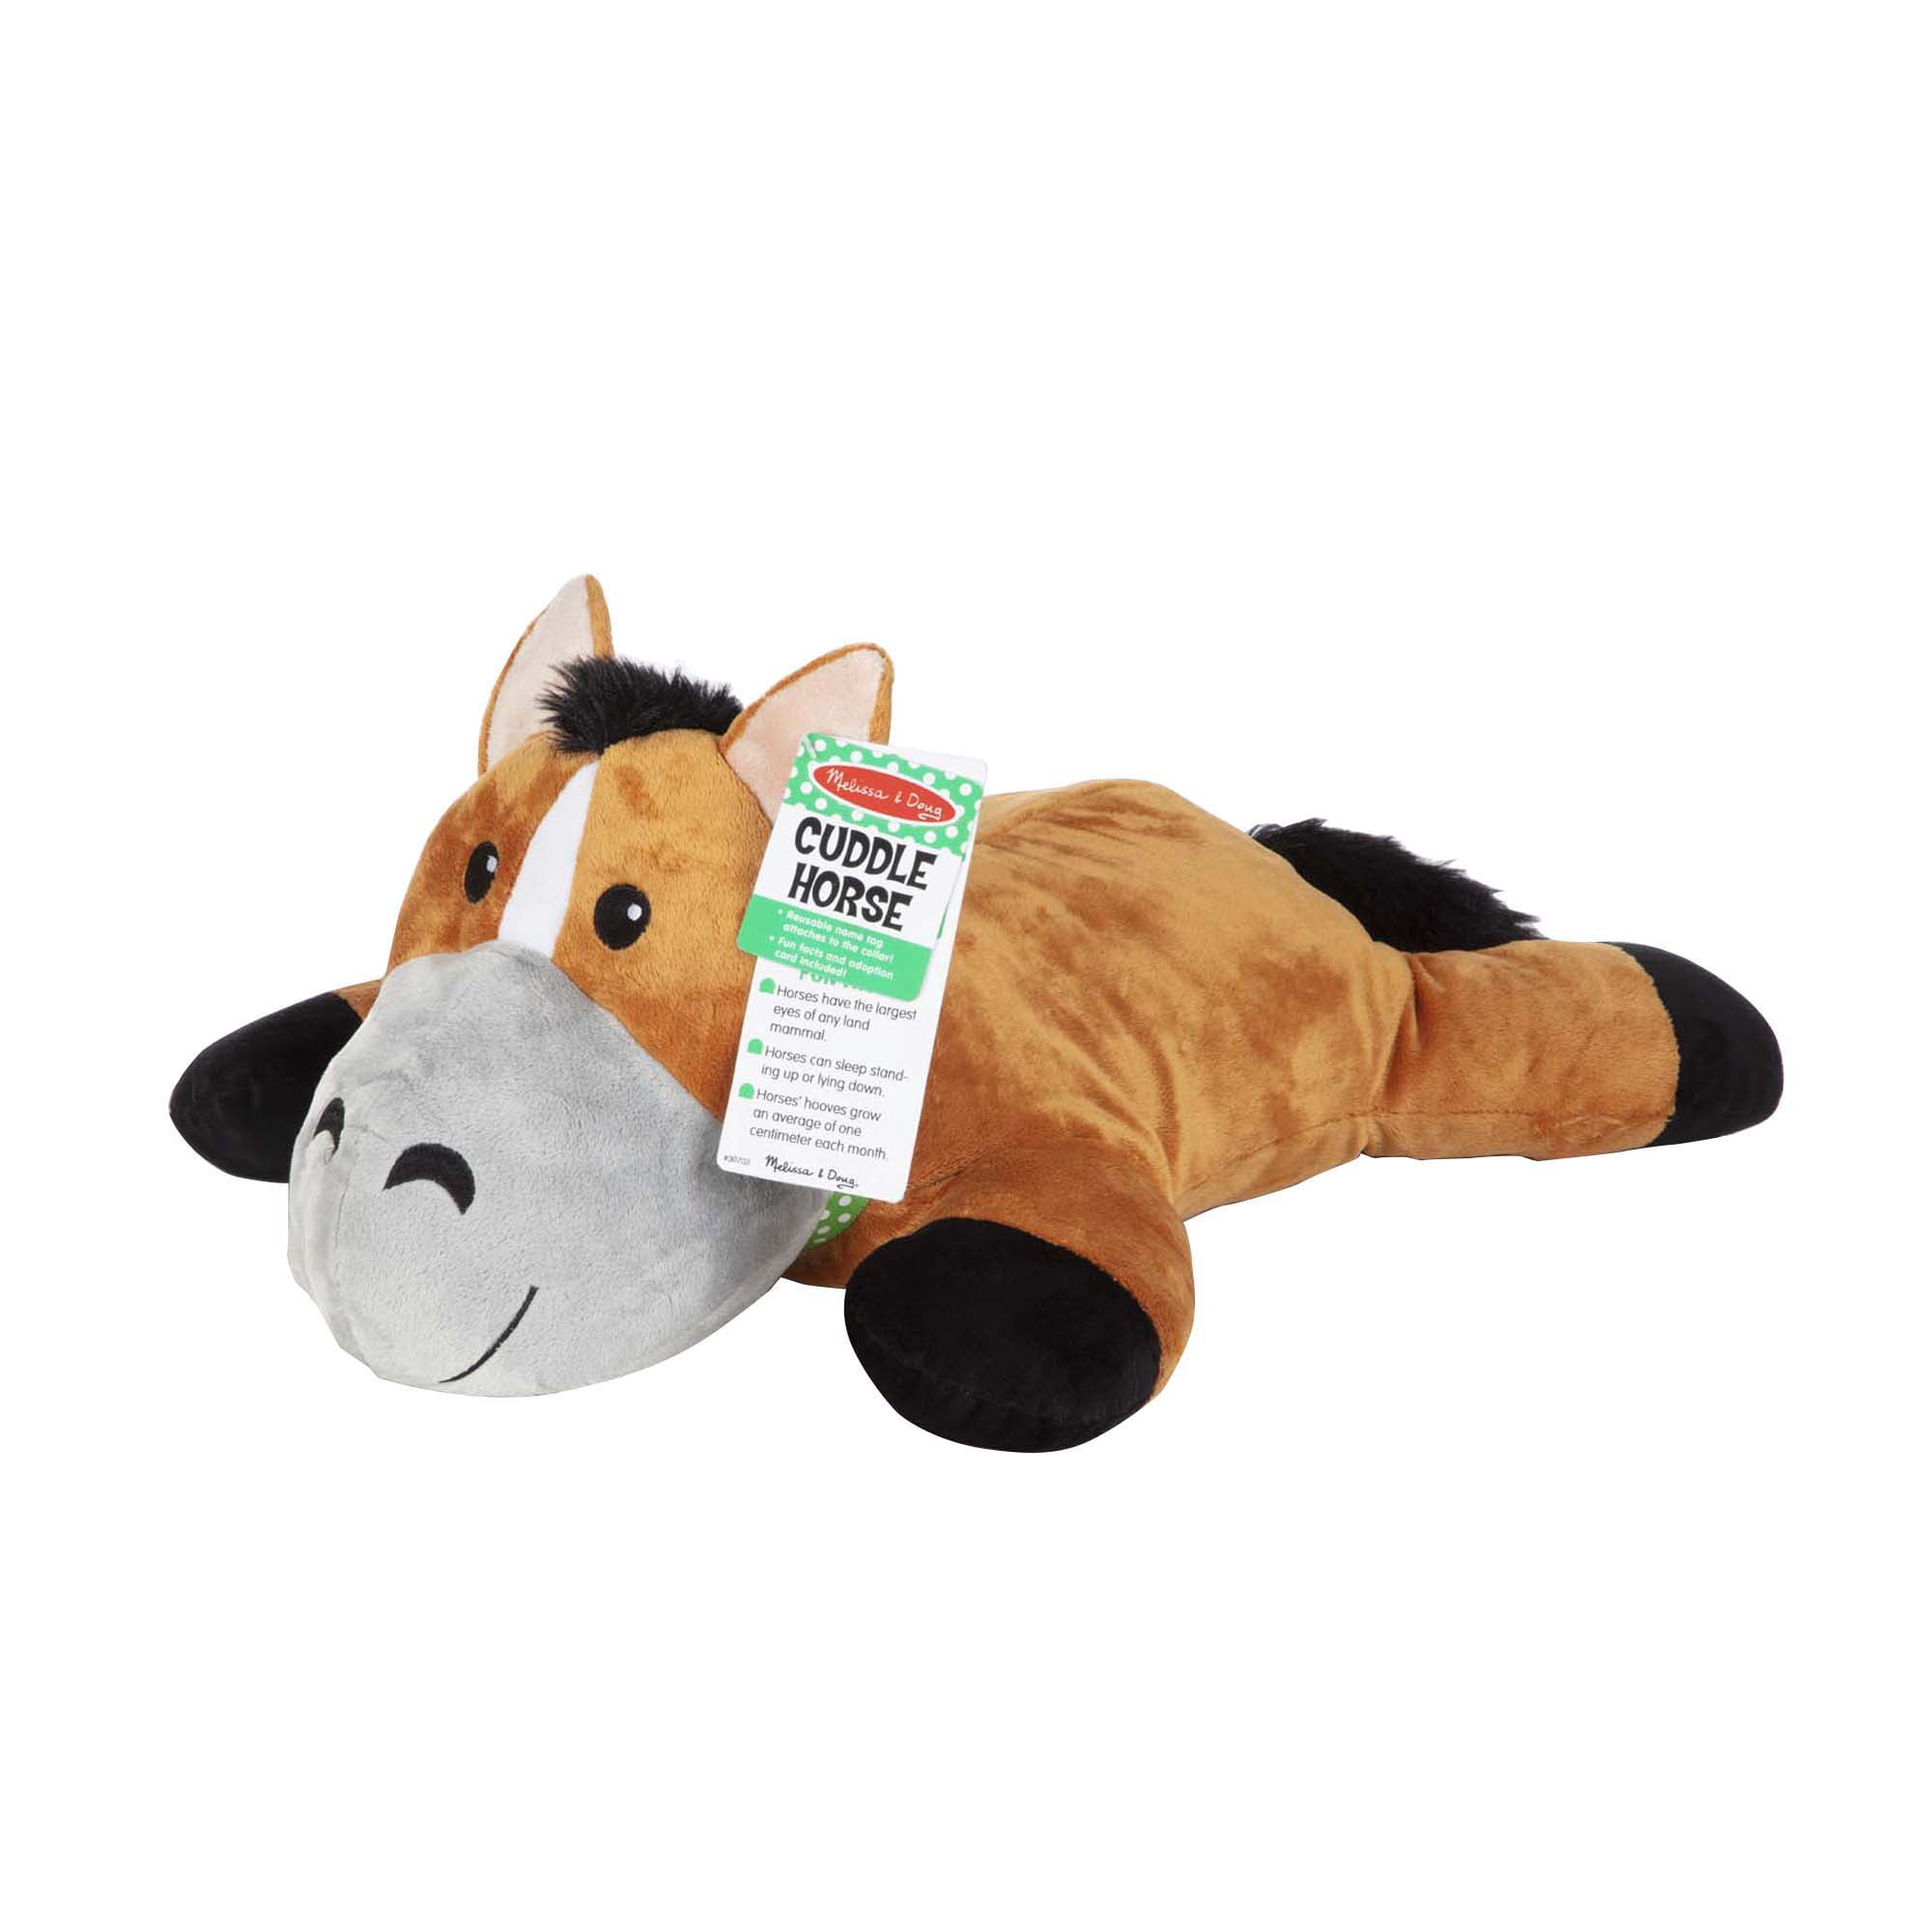 Melissa & Doug Cuddle Horse Jumbo Plush Stuffed Animal with Activity Card -  